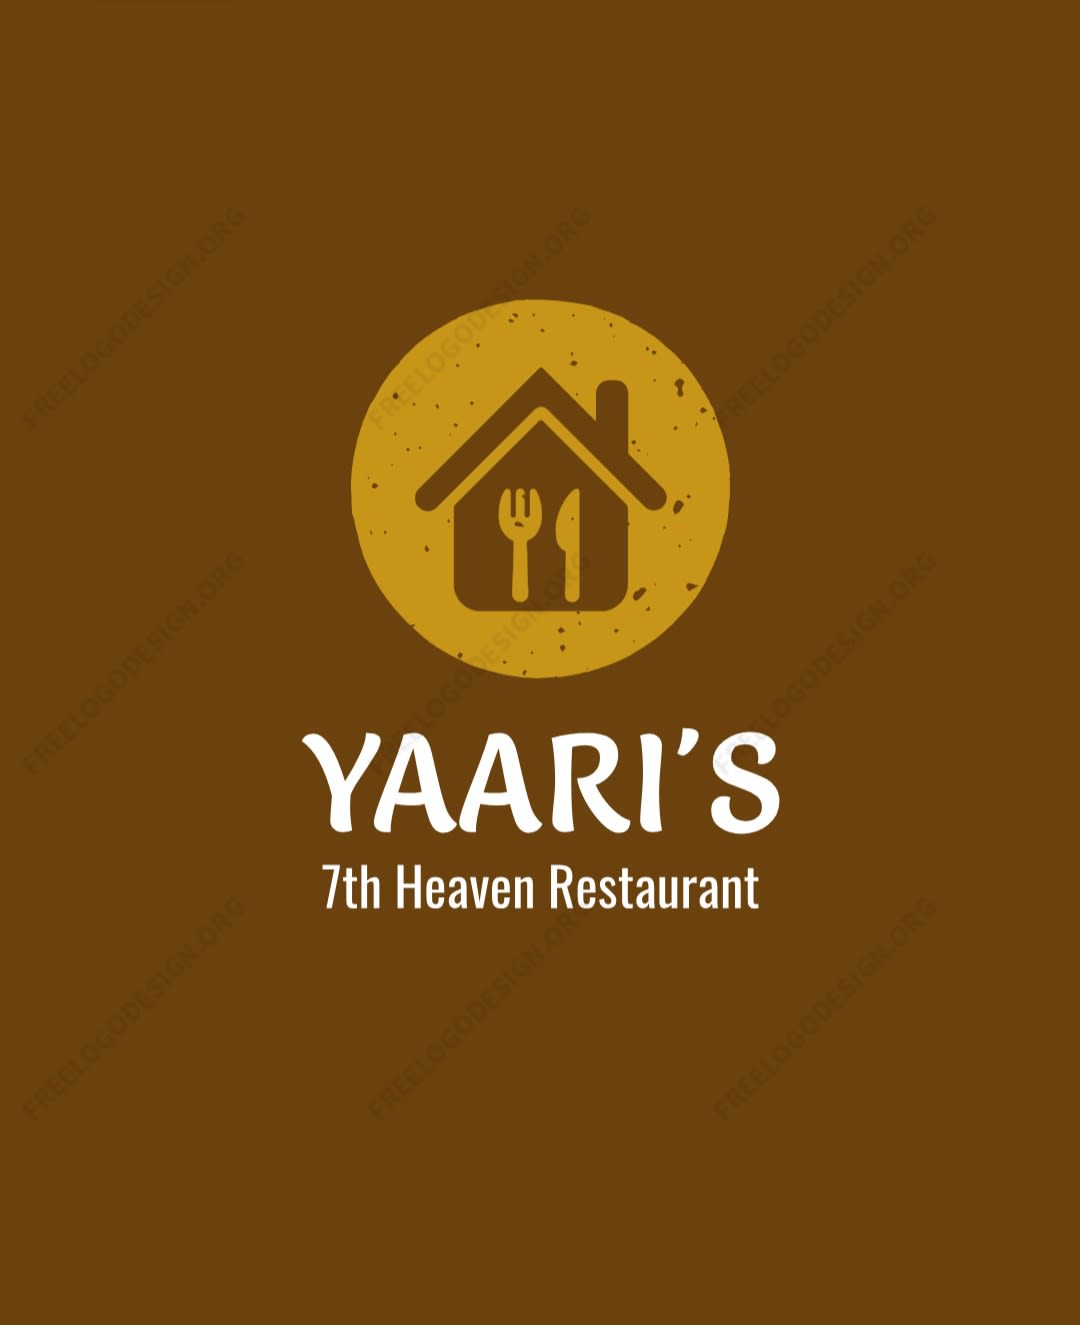 Yaari's 7th Heaven Restaurant